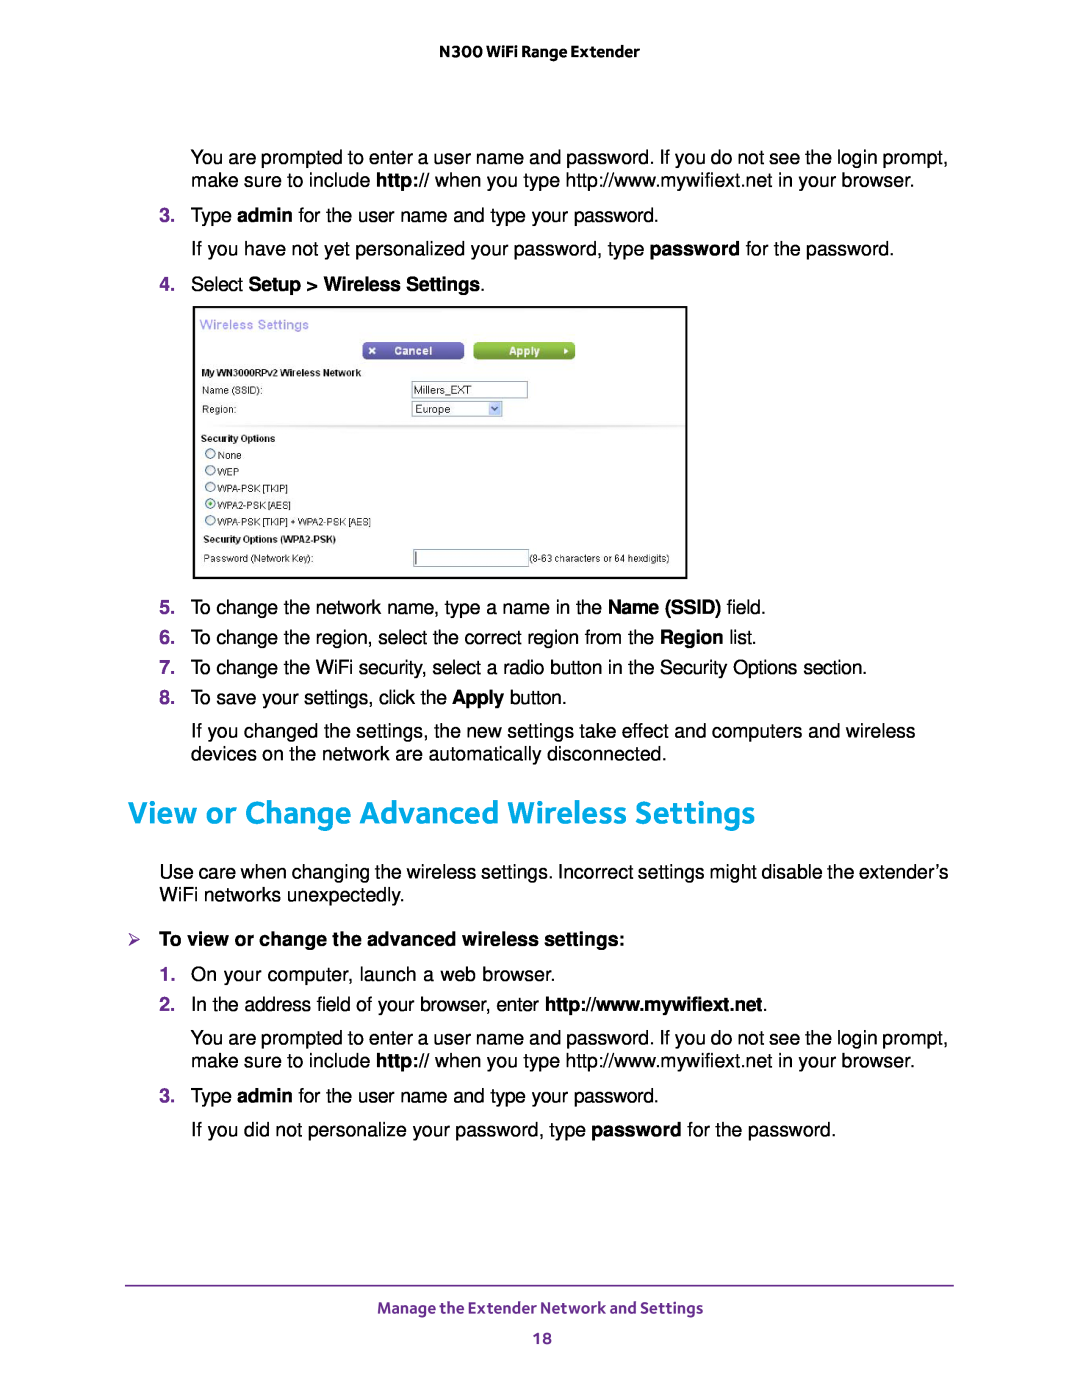 NETGEAR EX2700 user manual View or Change Advanced Wireless Settings, Select Setup Wireless Settings 